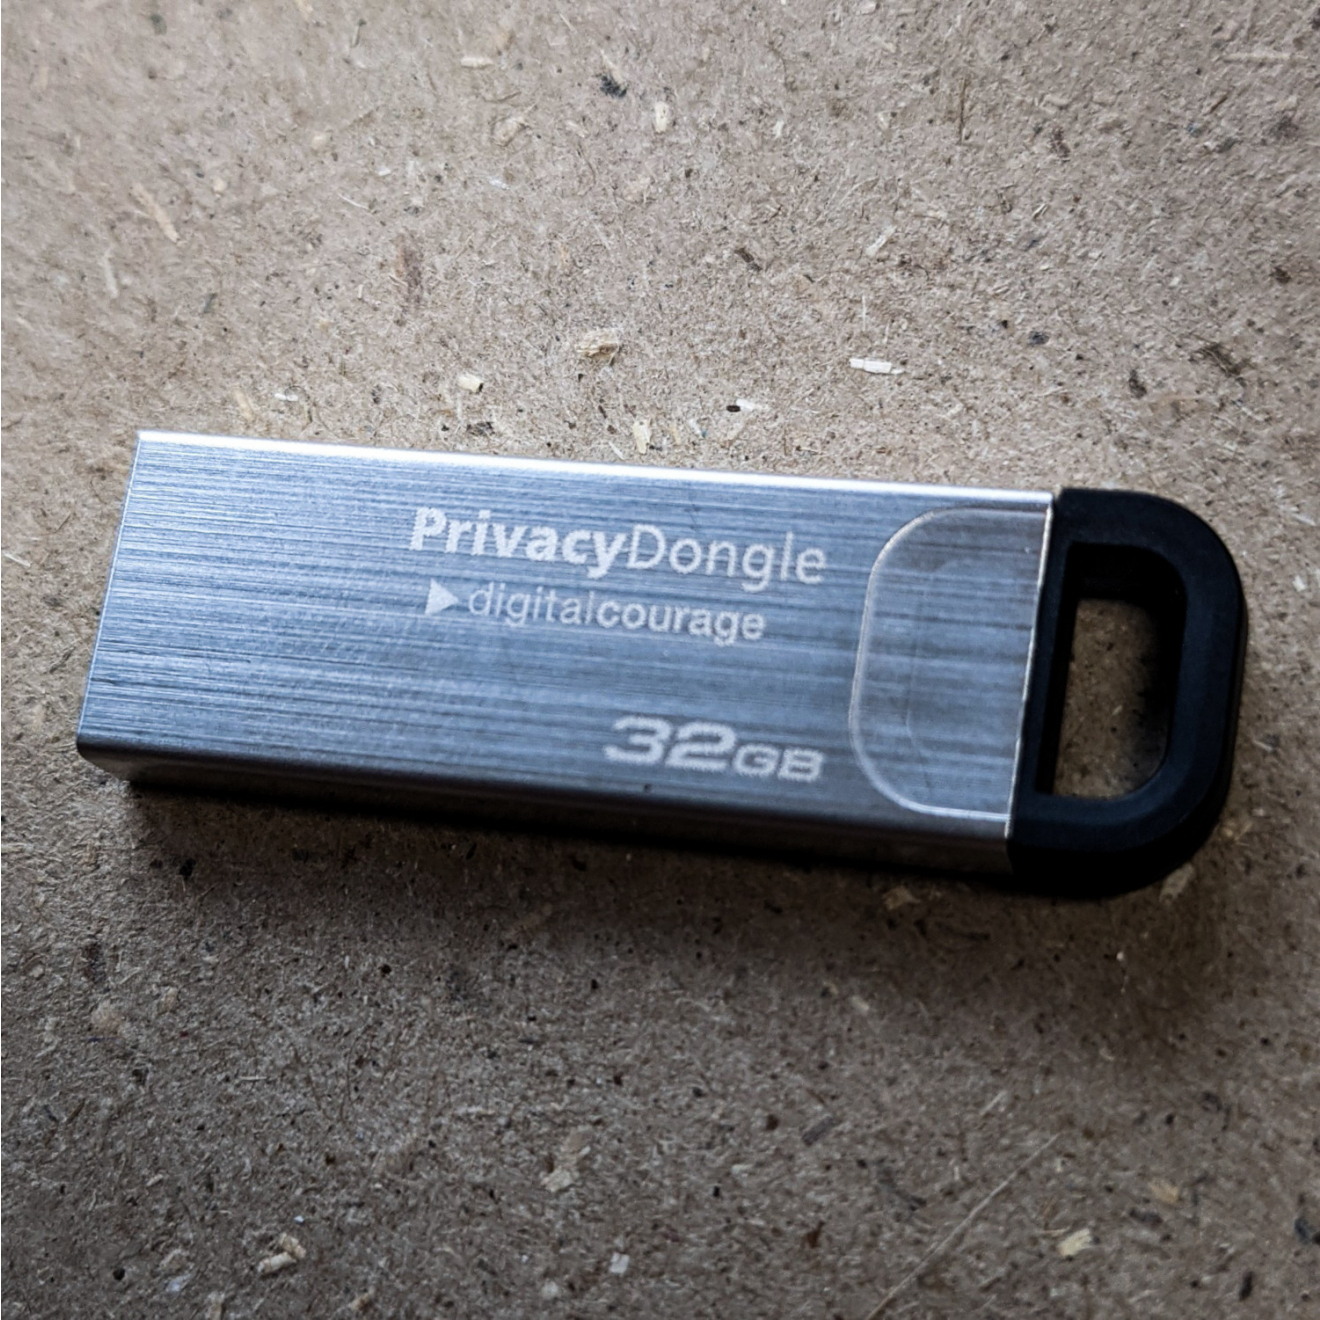 PrivacyDongle RKT (32 GB)